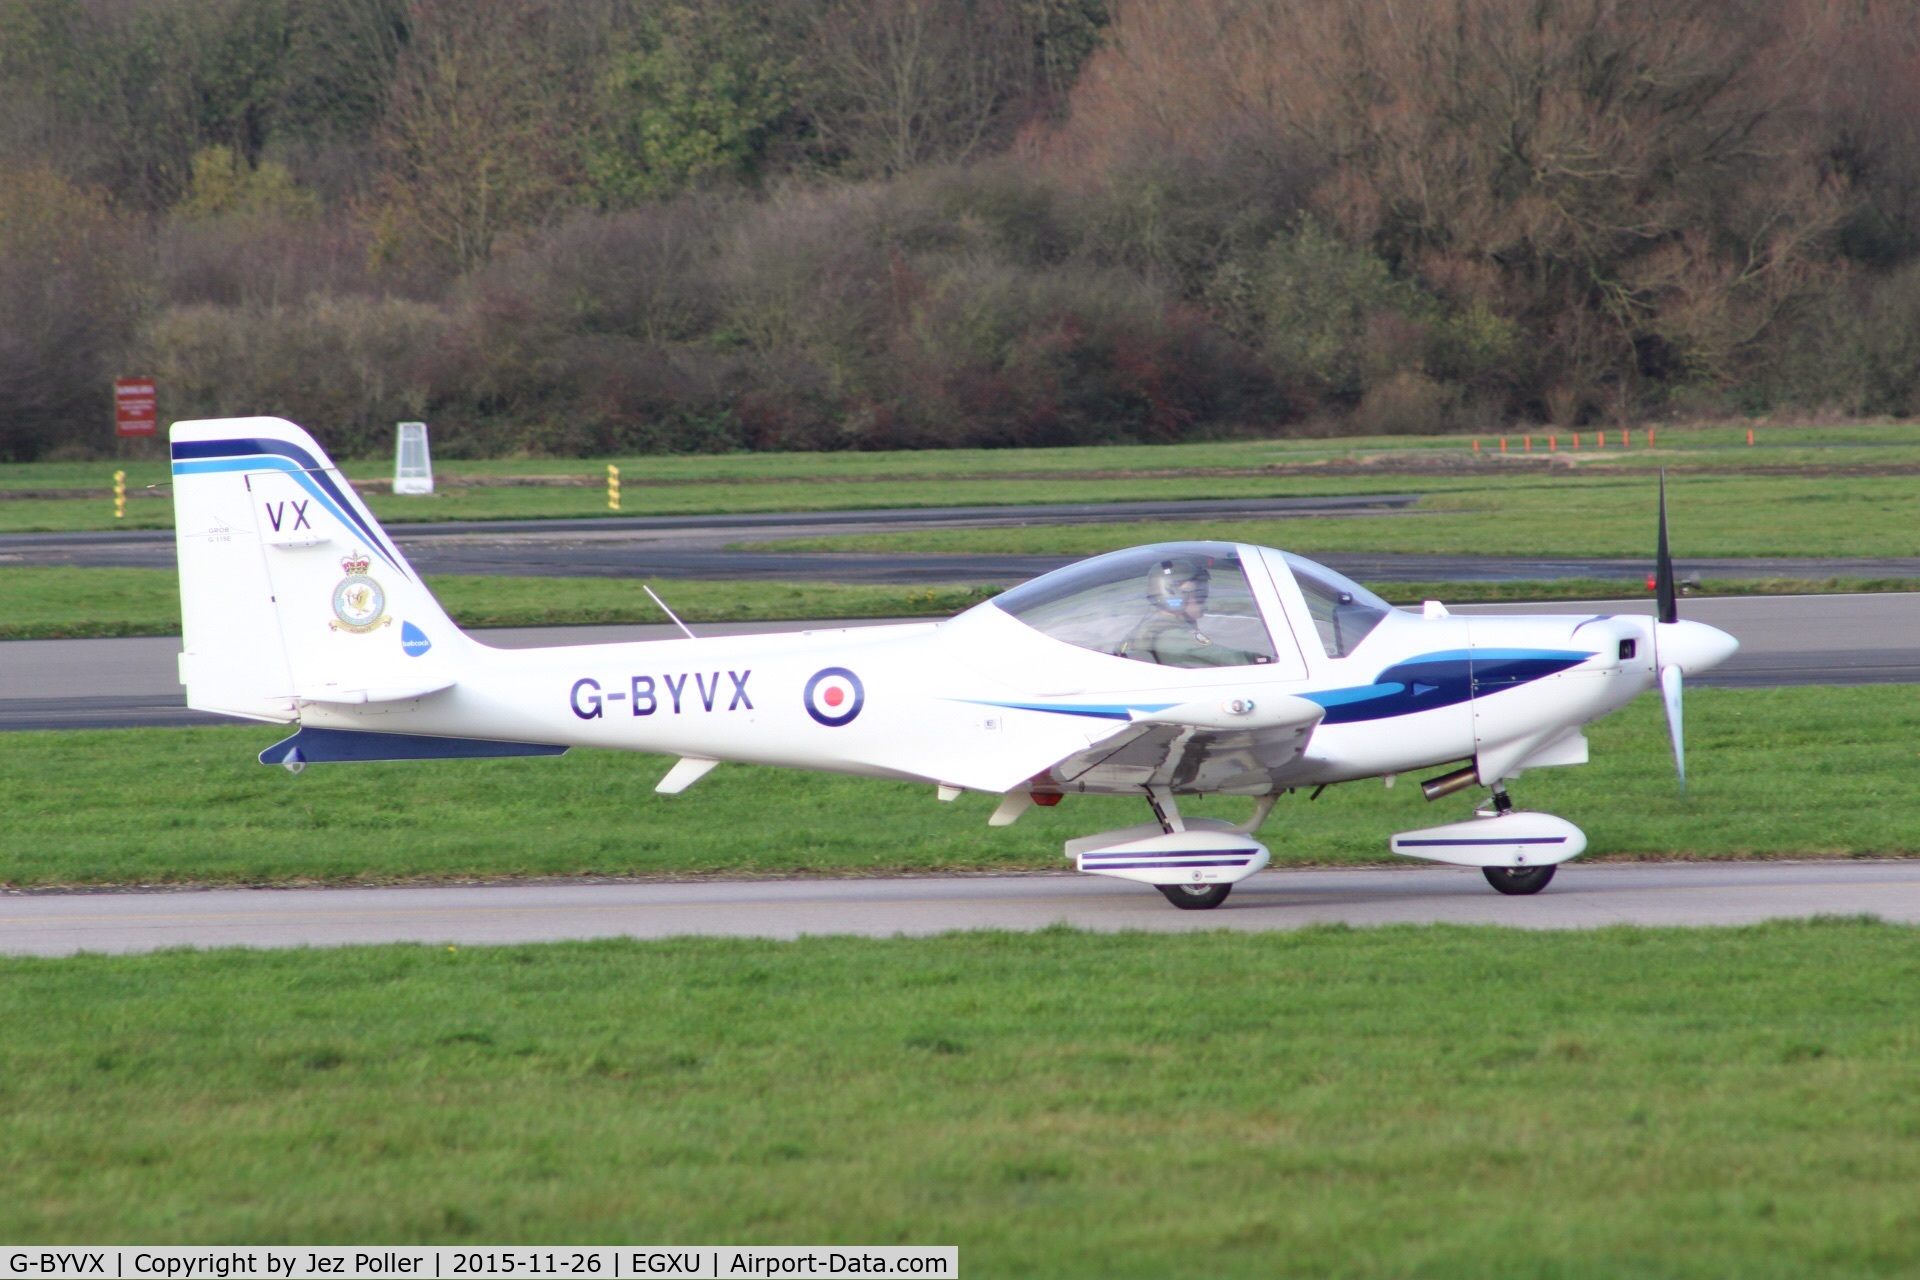 G-BYVX, 2000 Grob G-115E Tutor T1 C/N 82133/E, taxi-in from runway 04 to main apron